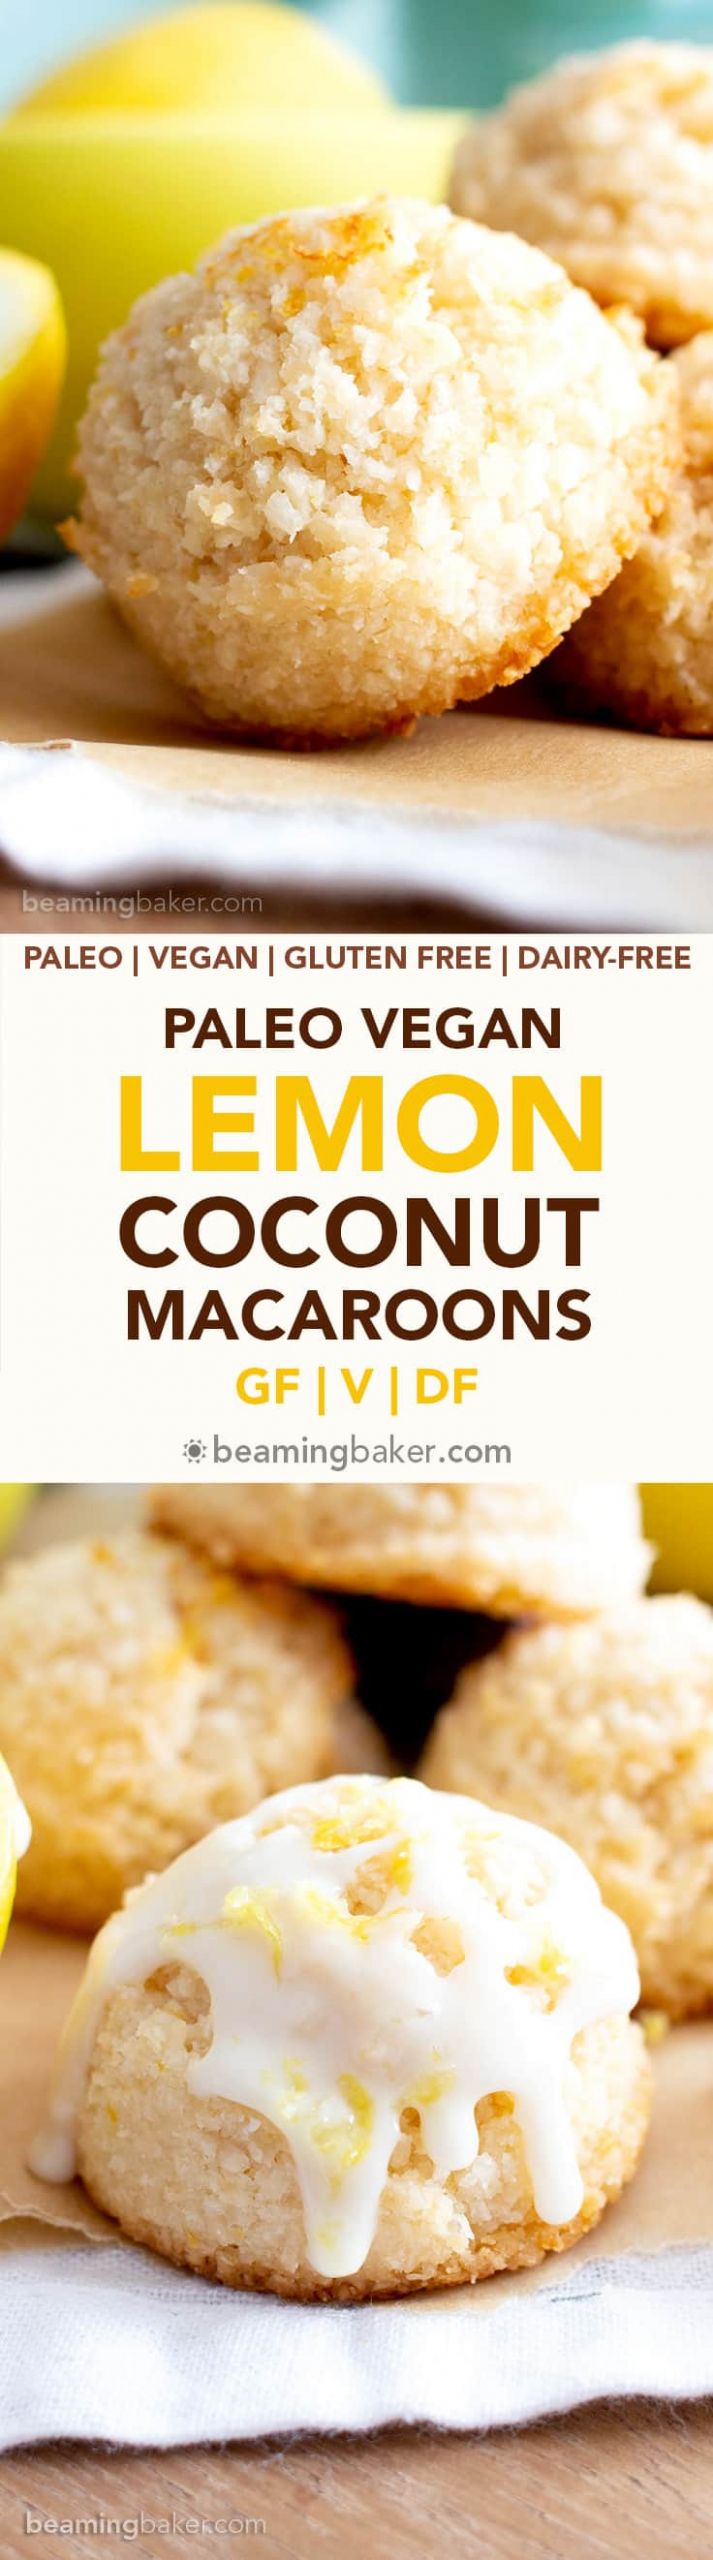 Dairy Free Coconut Macaroons
 Lemon Coconut Macaroons Recipe Vegan Paleo Gluten Free